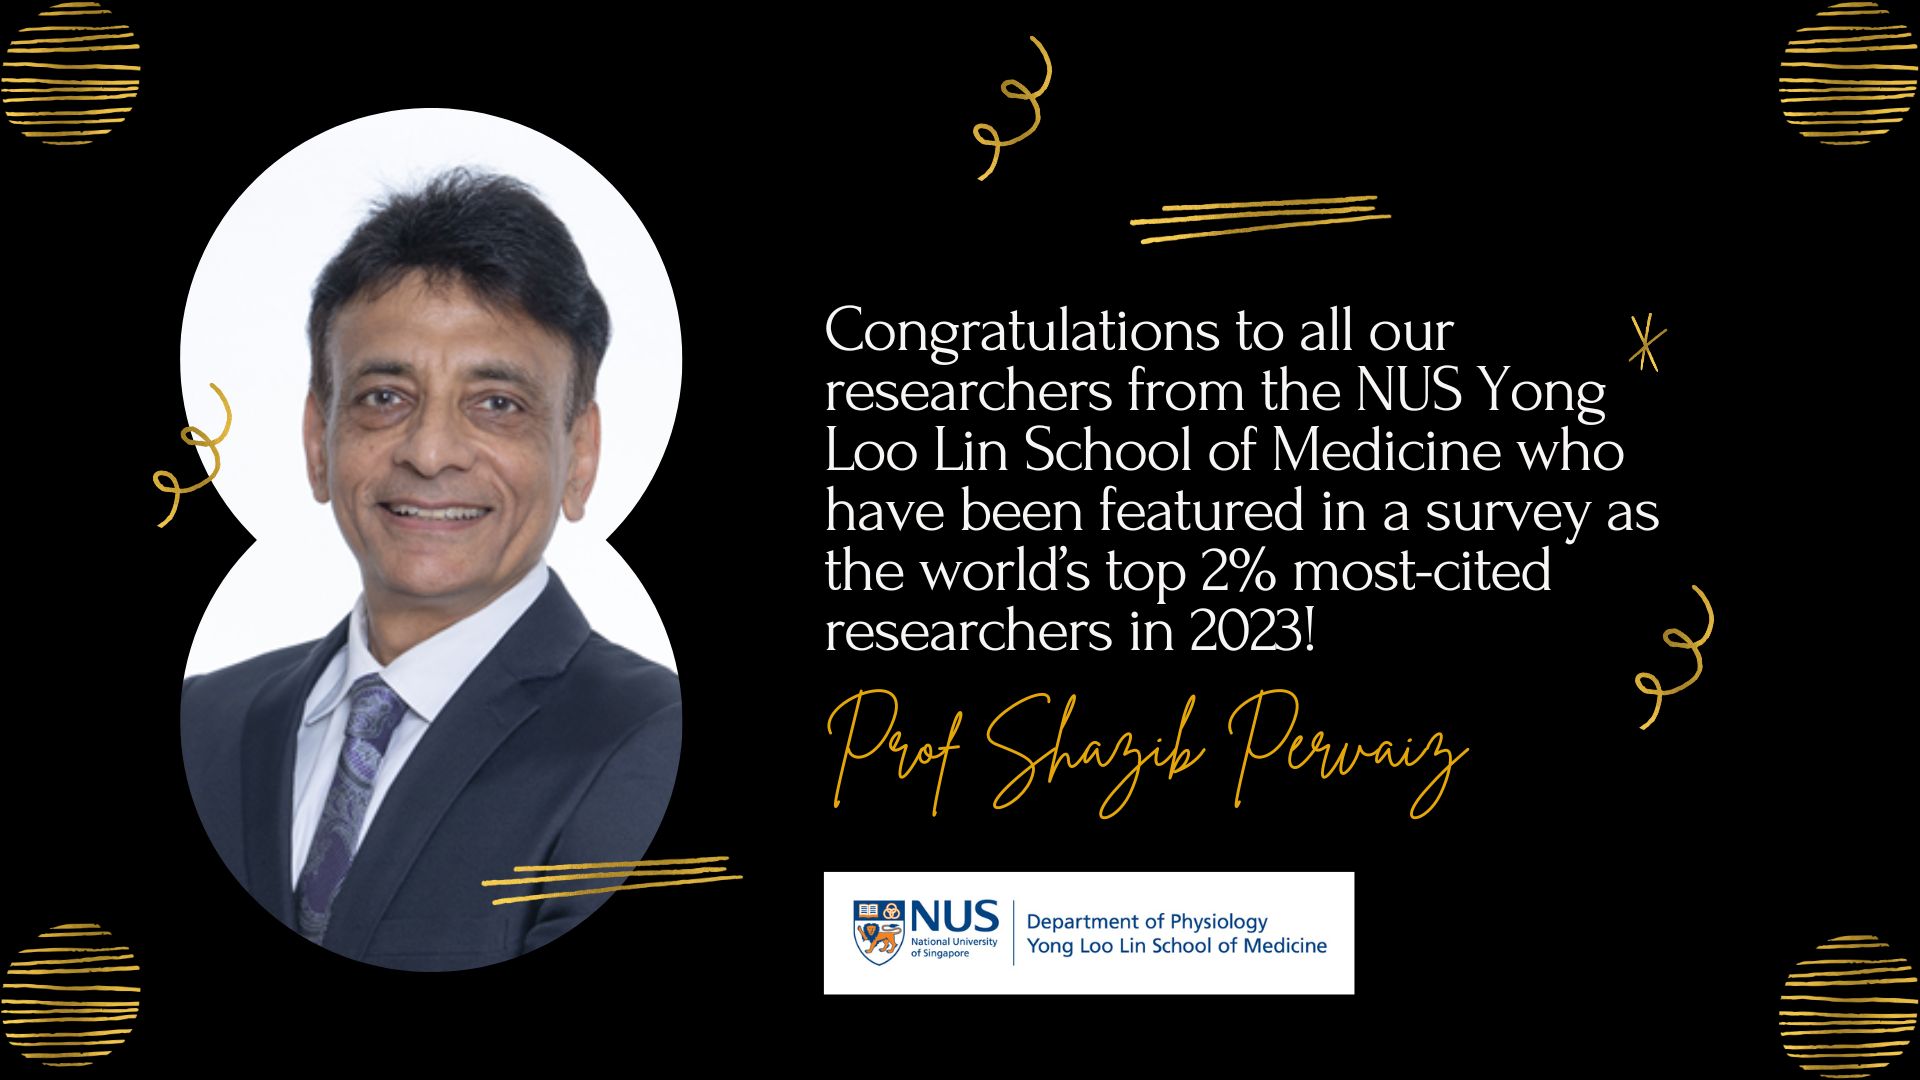 Congratulations to Prof Shazib Pervaiz!